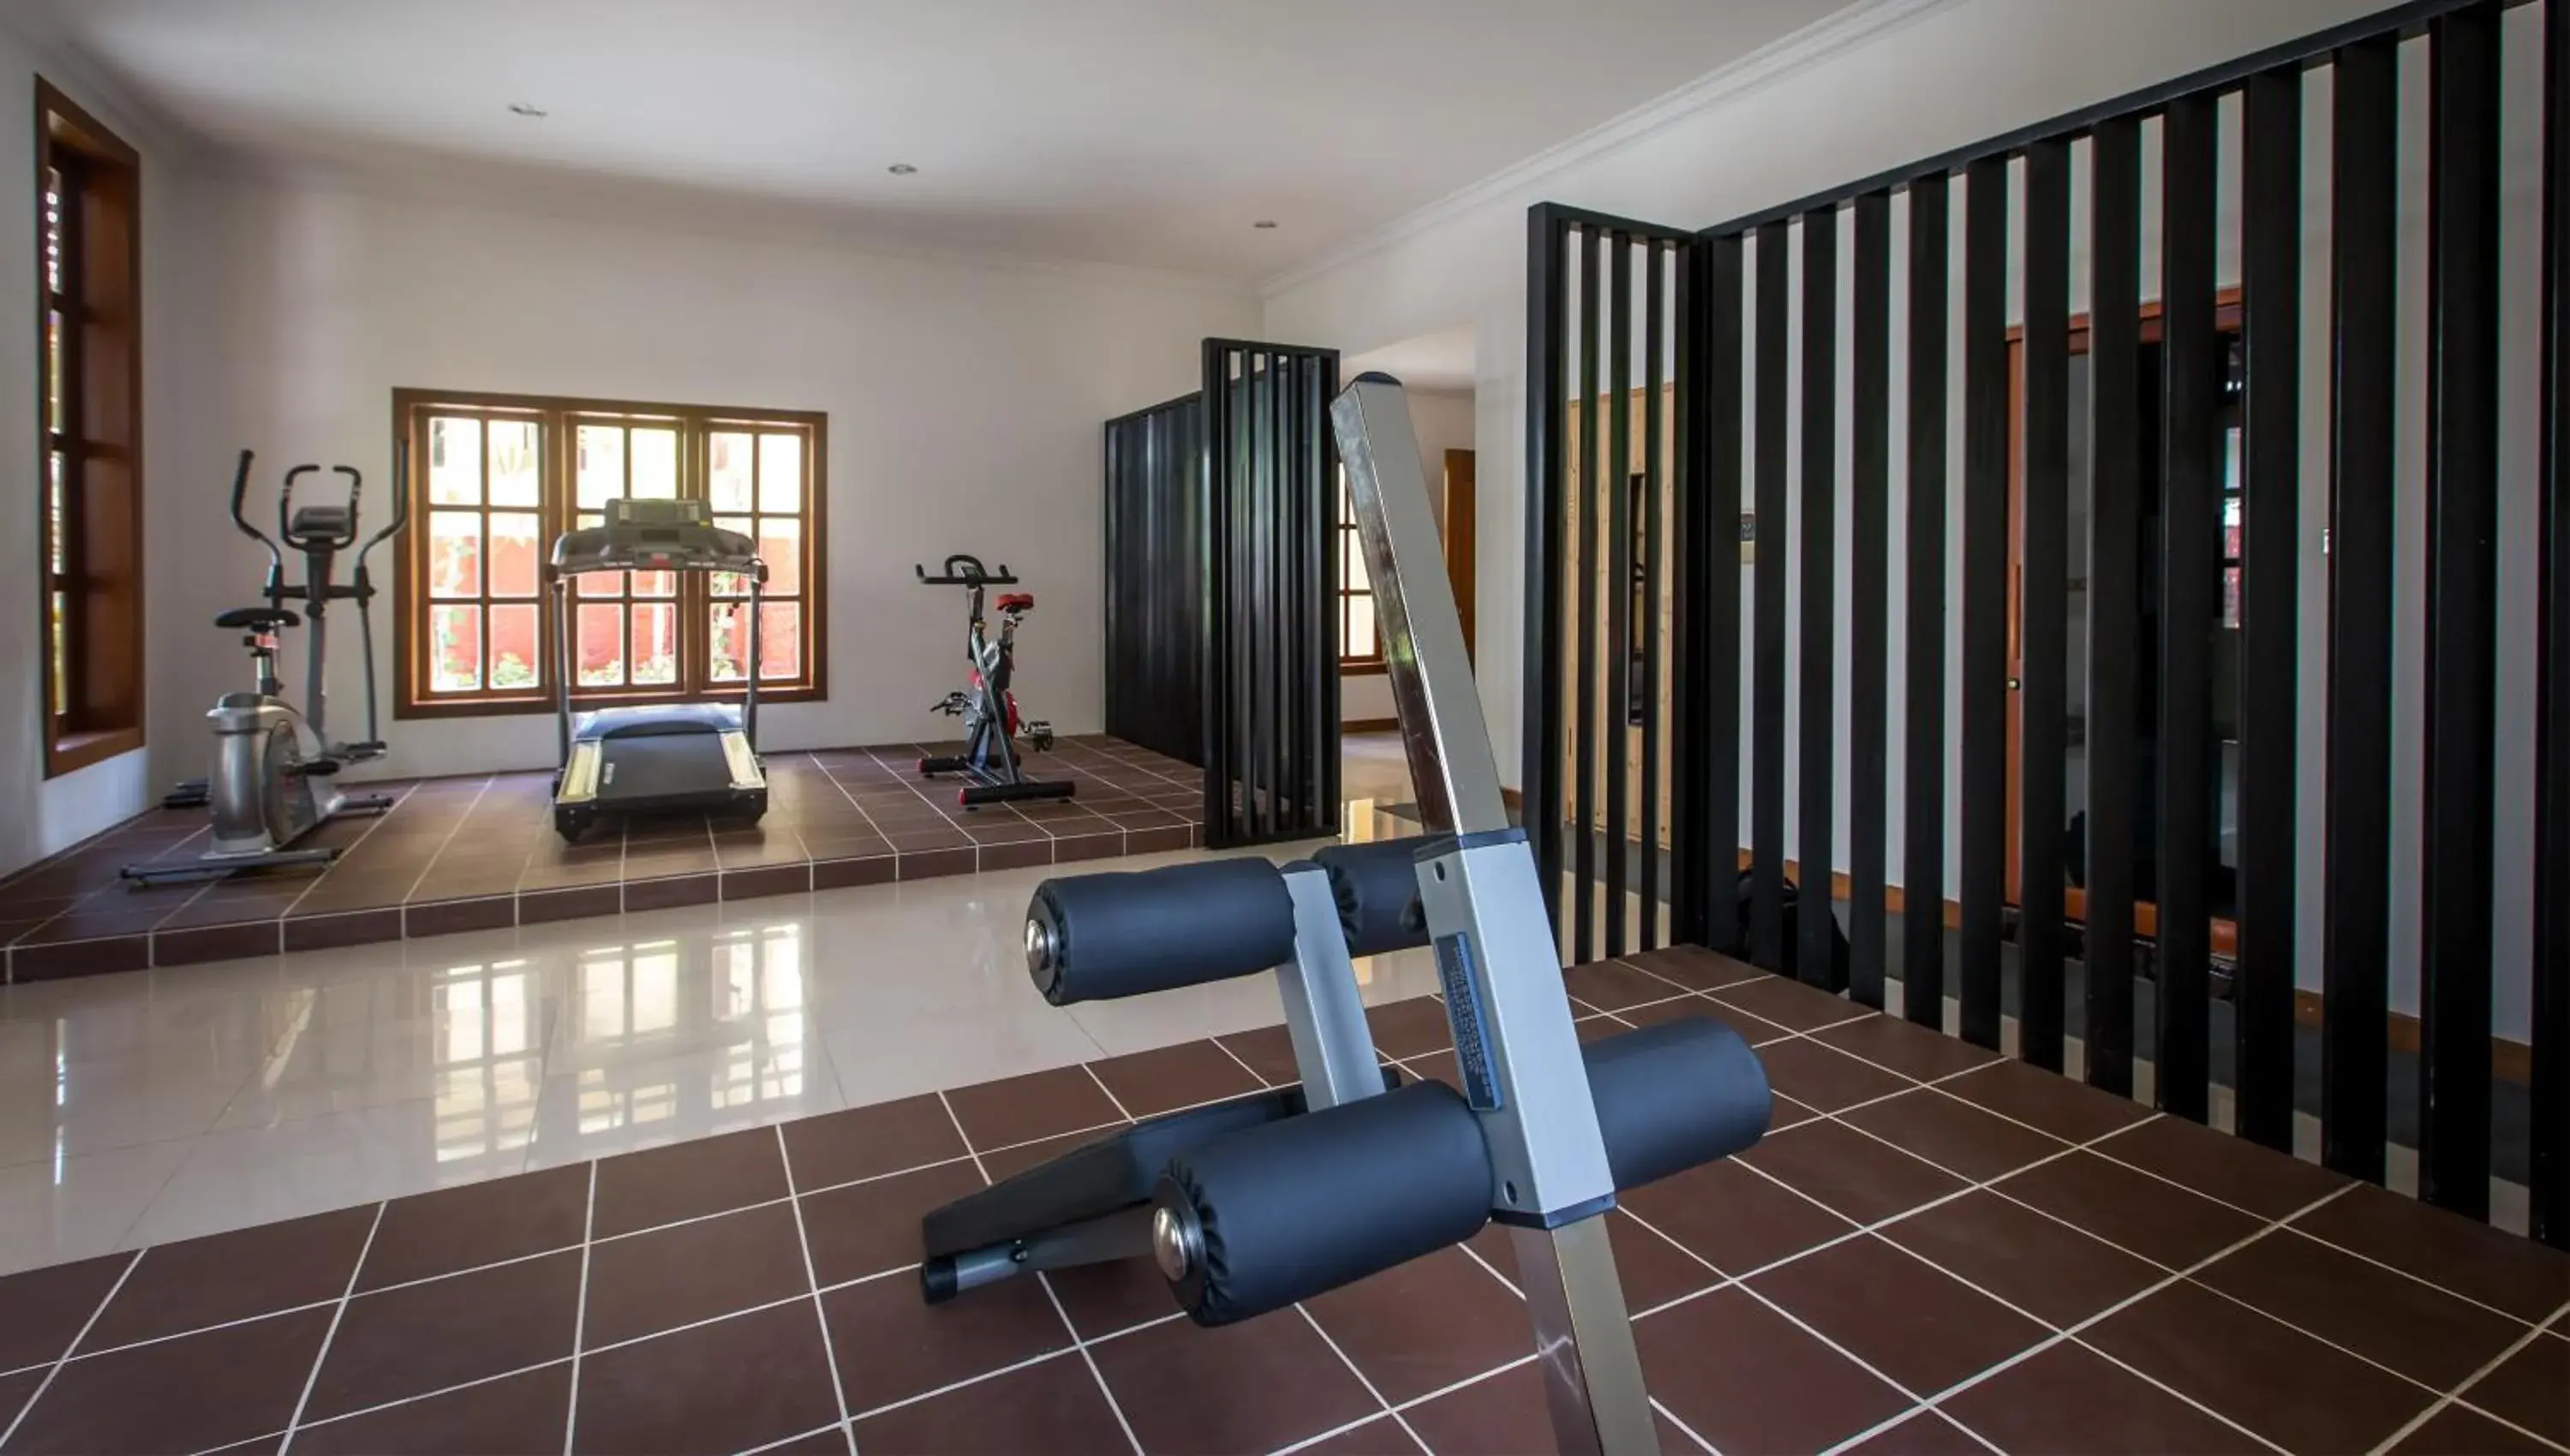 Fitness centre/facilities, Fitness Center/Facilities in La Rivière d' Angkor Resort